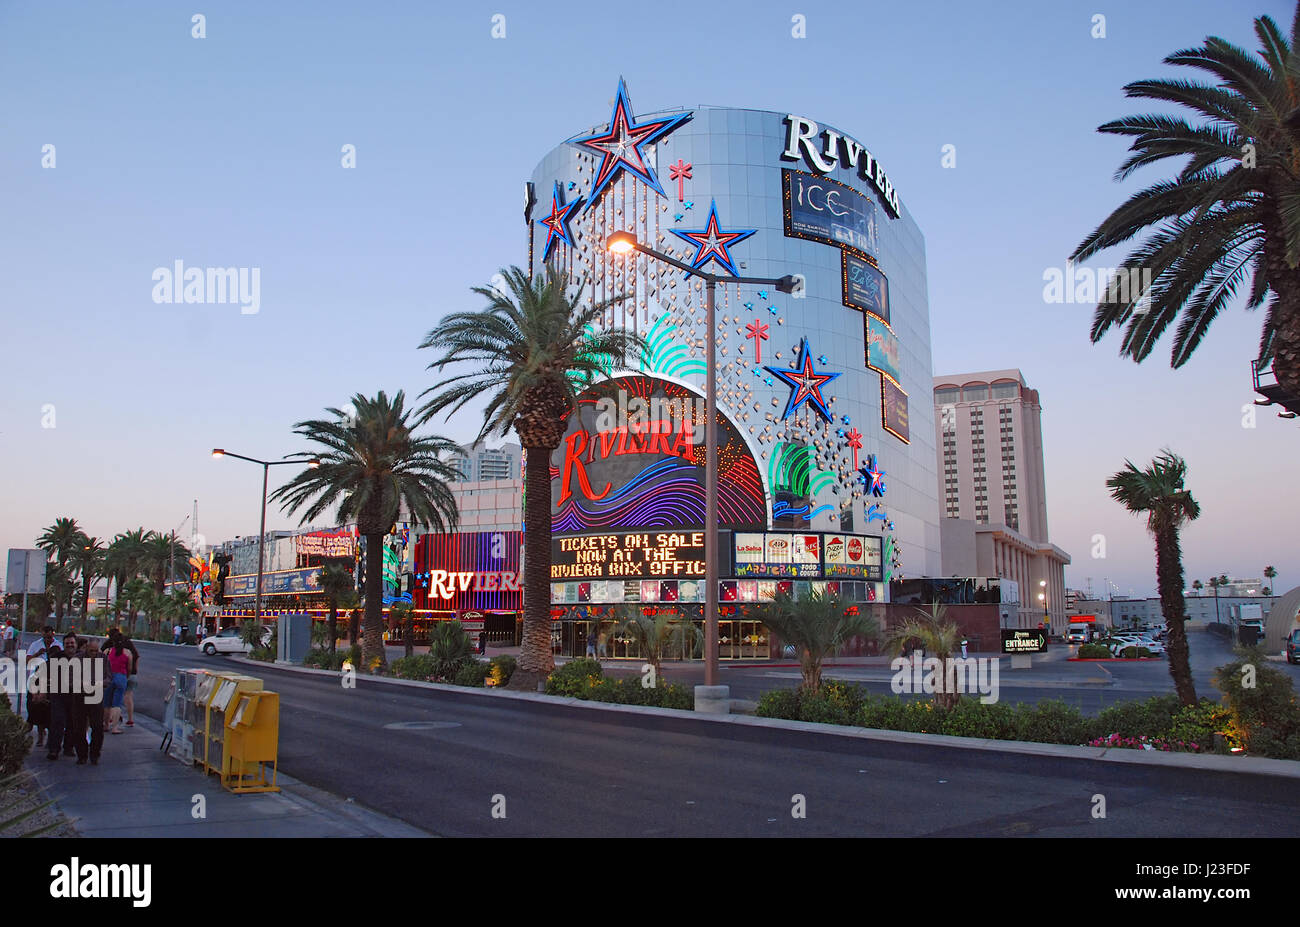 Riviera Hotel Las Vegas